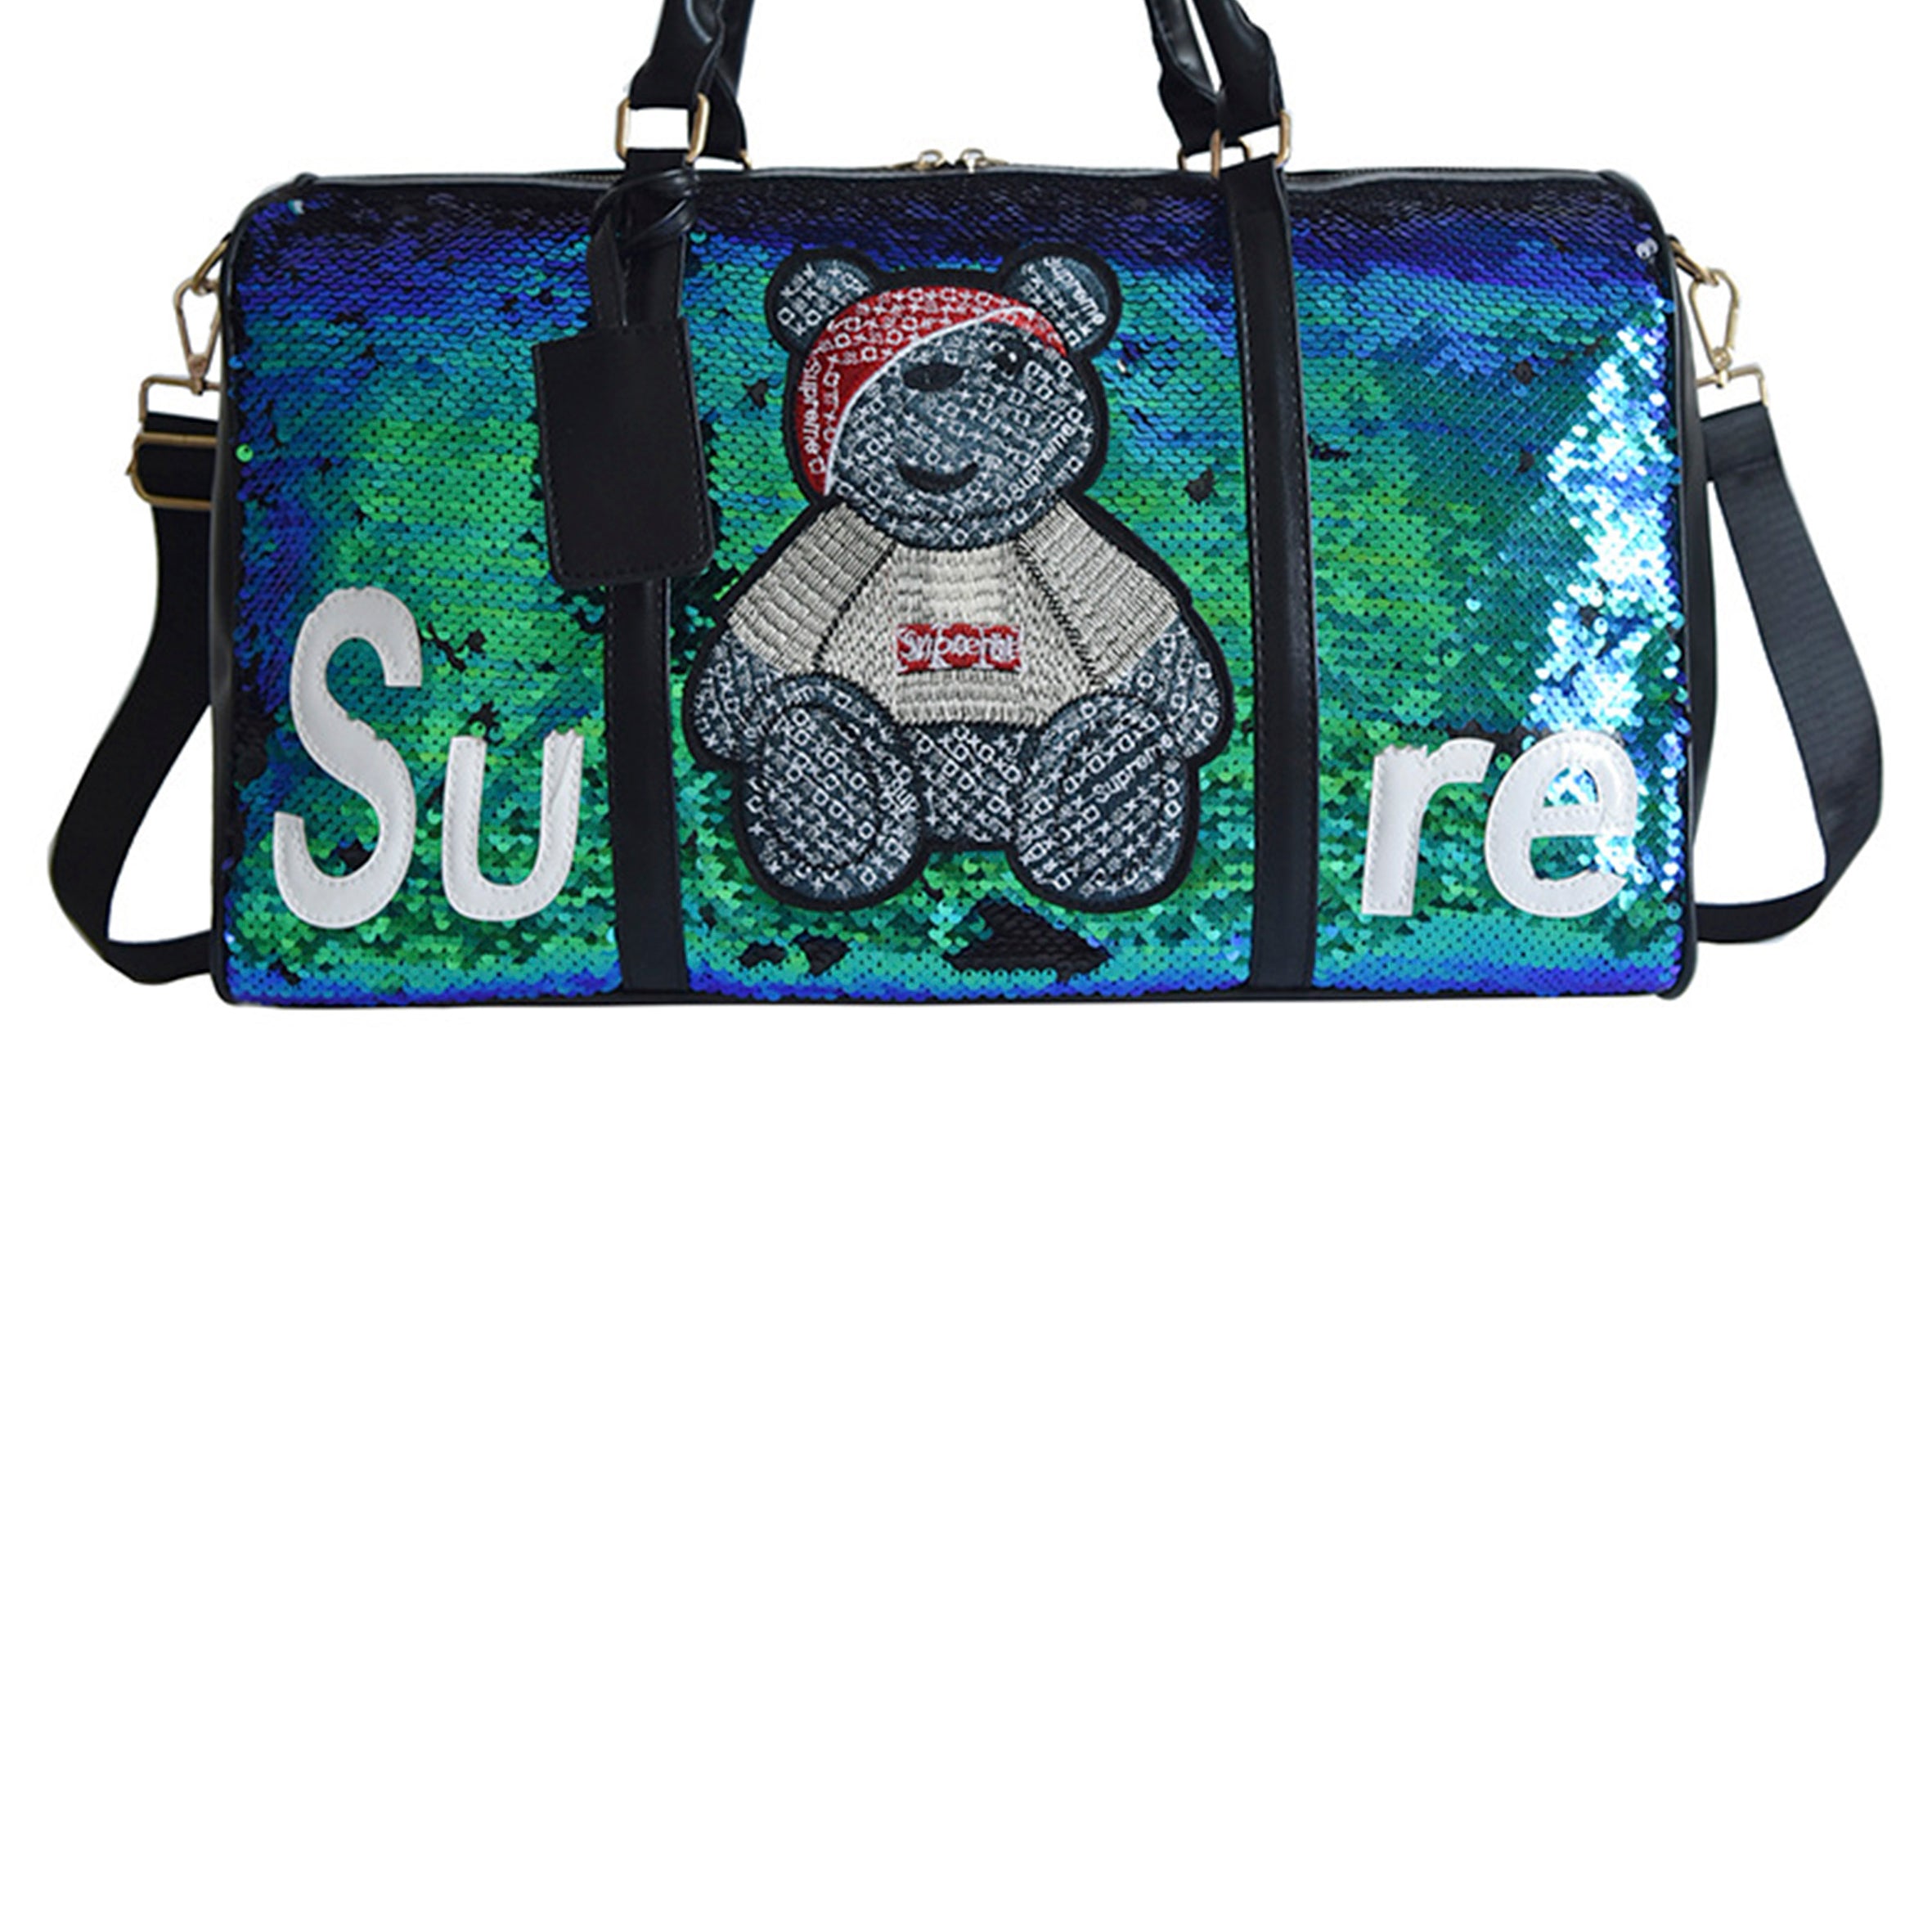 Bear Sequins Tote Handbags HB1016